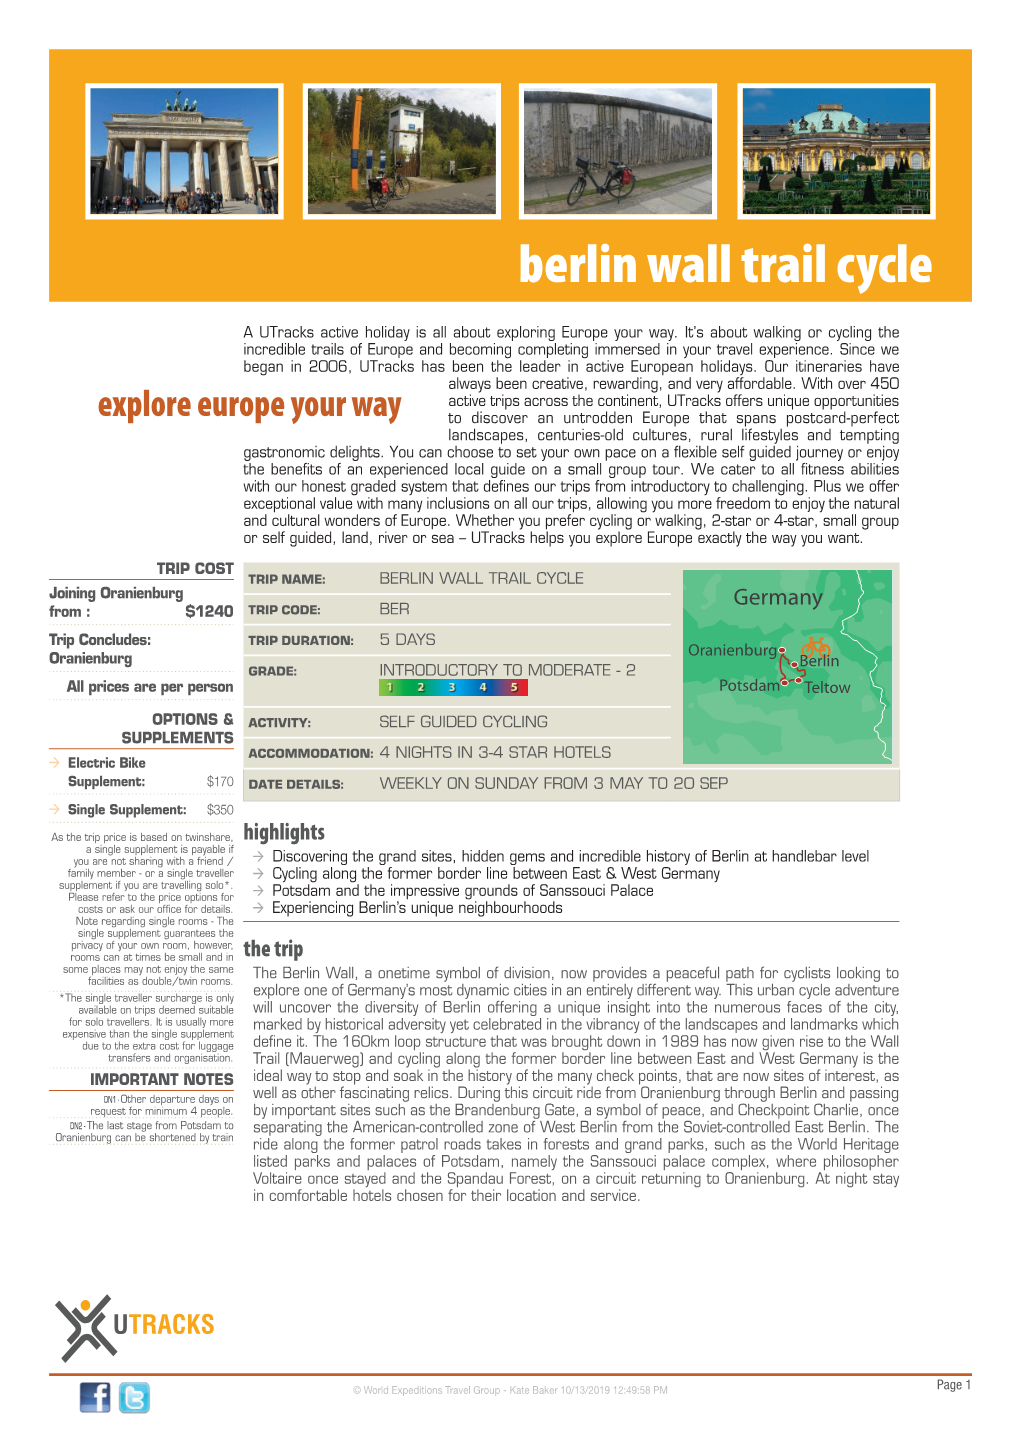 Berlin Wall Trail Cycle